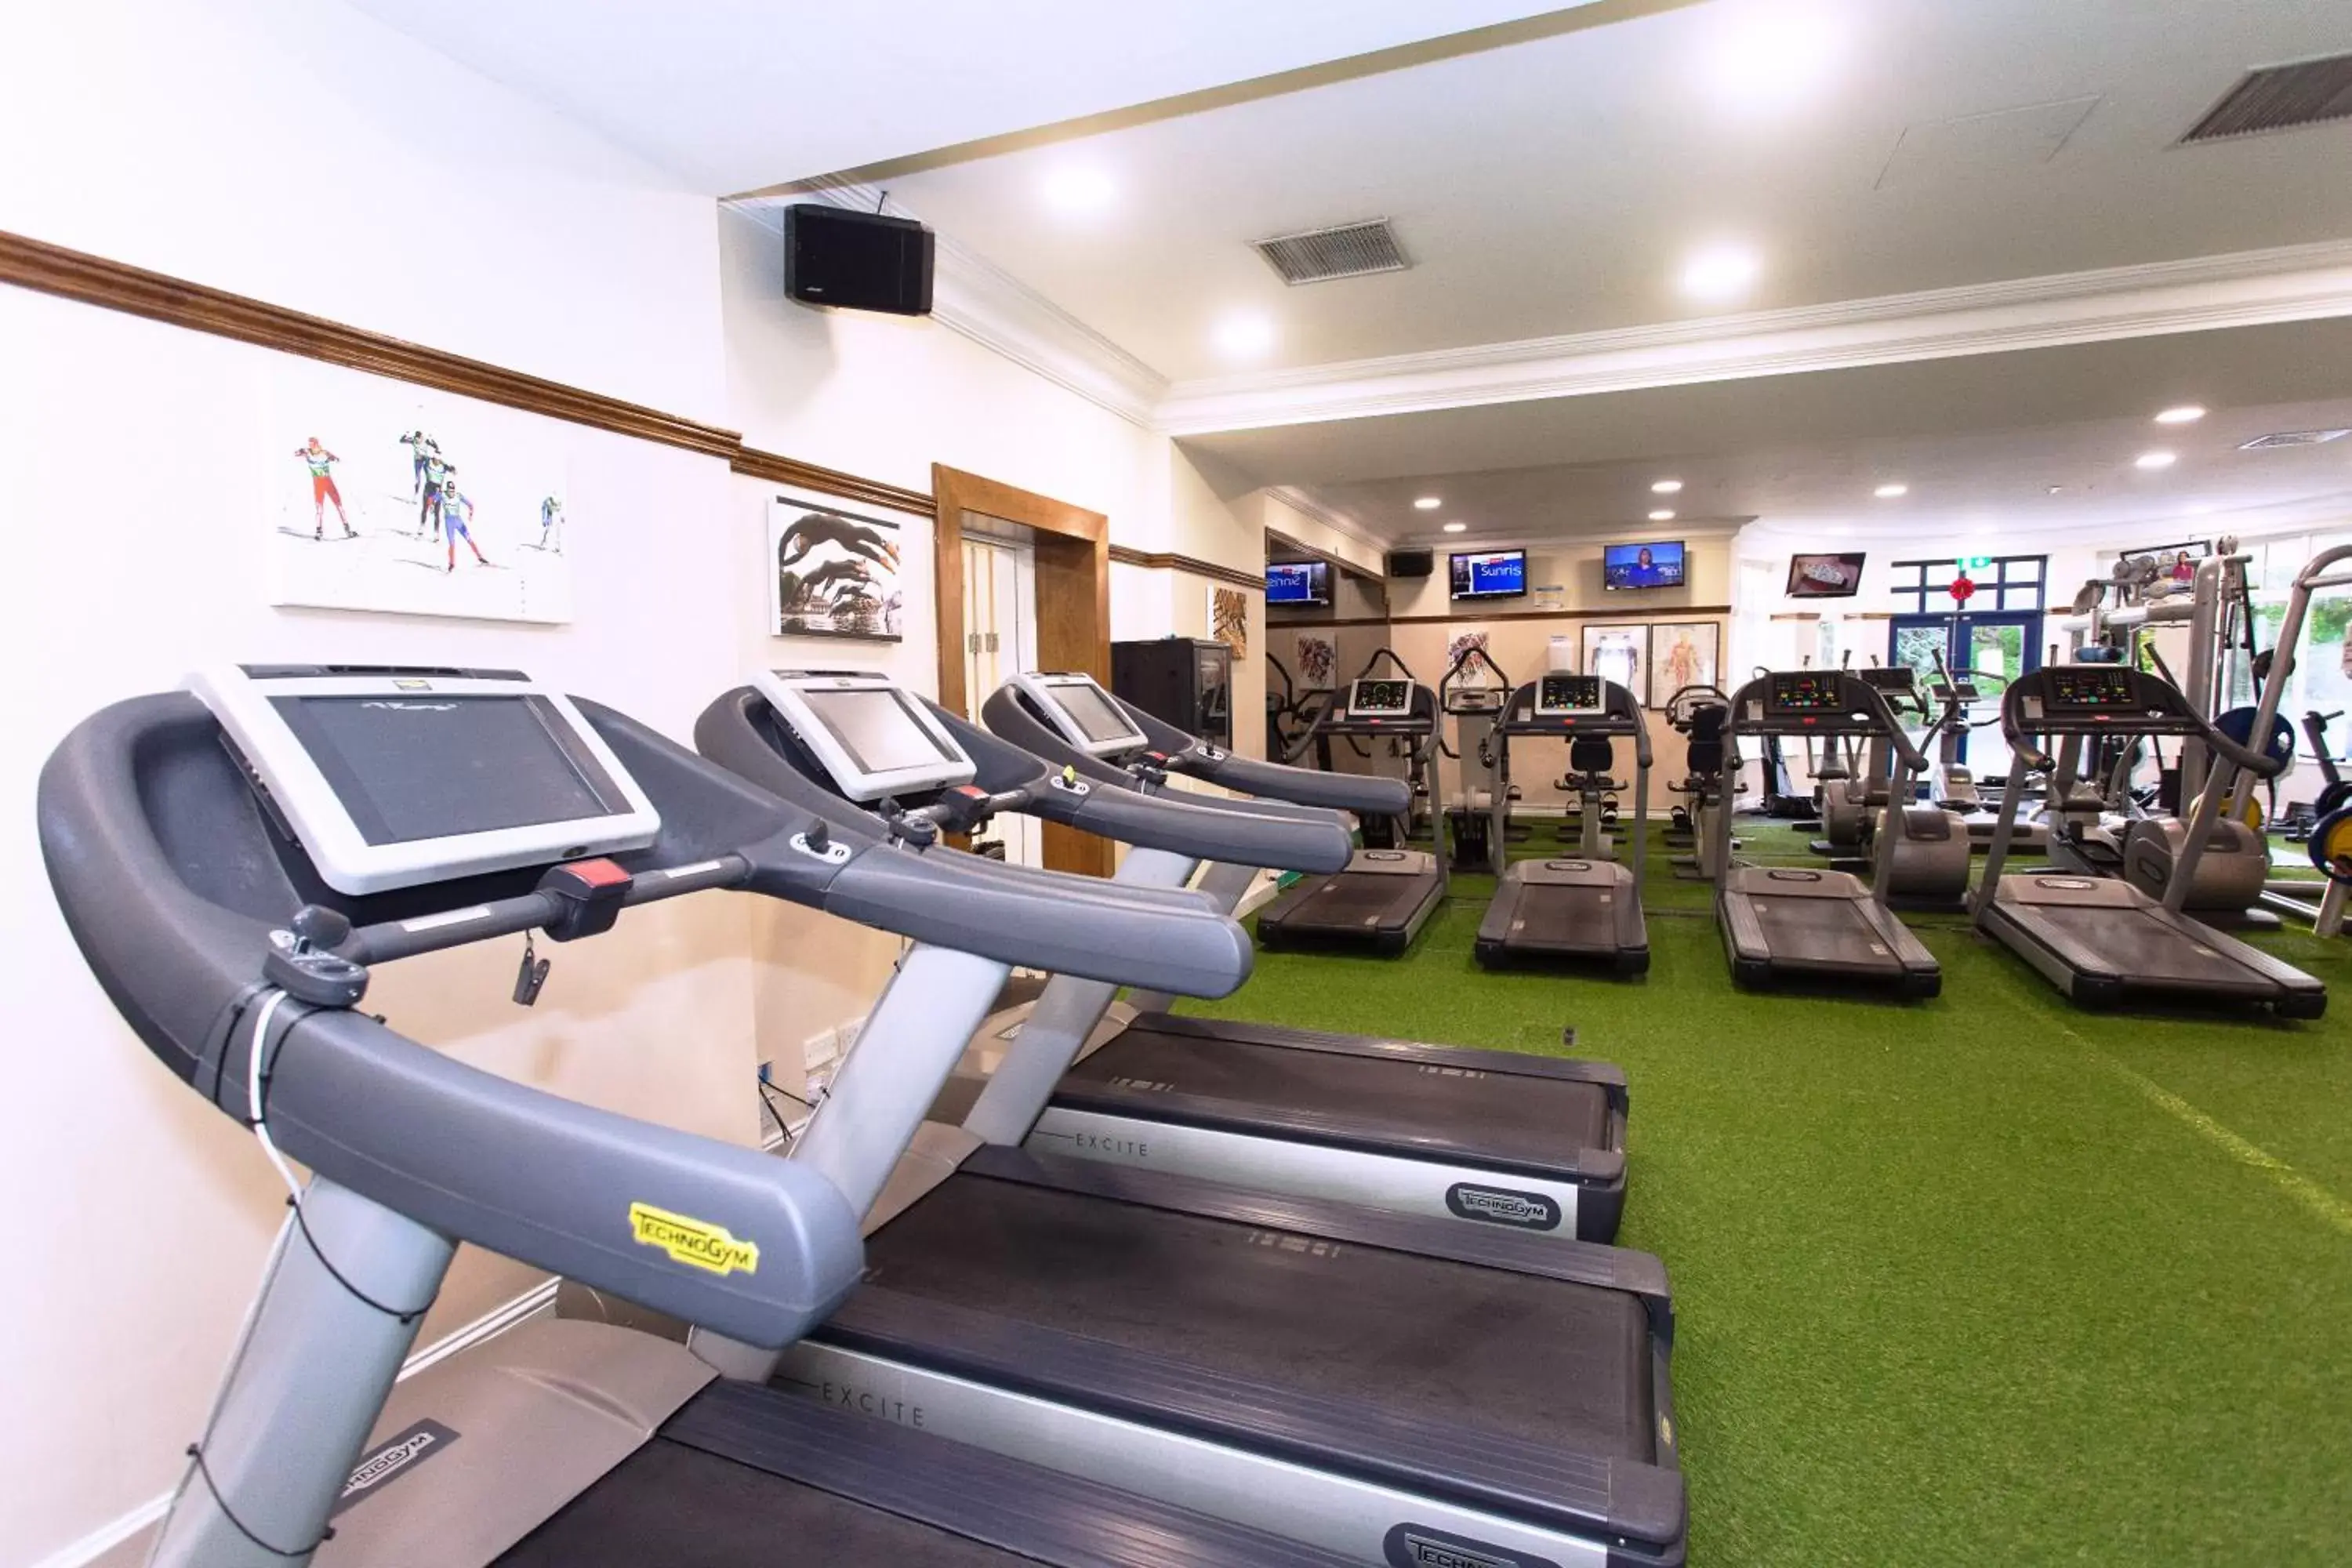 Fitness centre/facilities, Fitness Center/Facilities in The Ardilaun Hotel